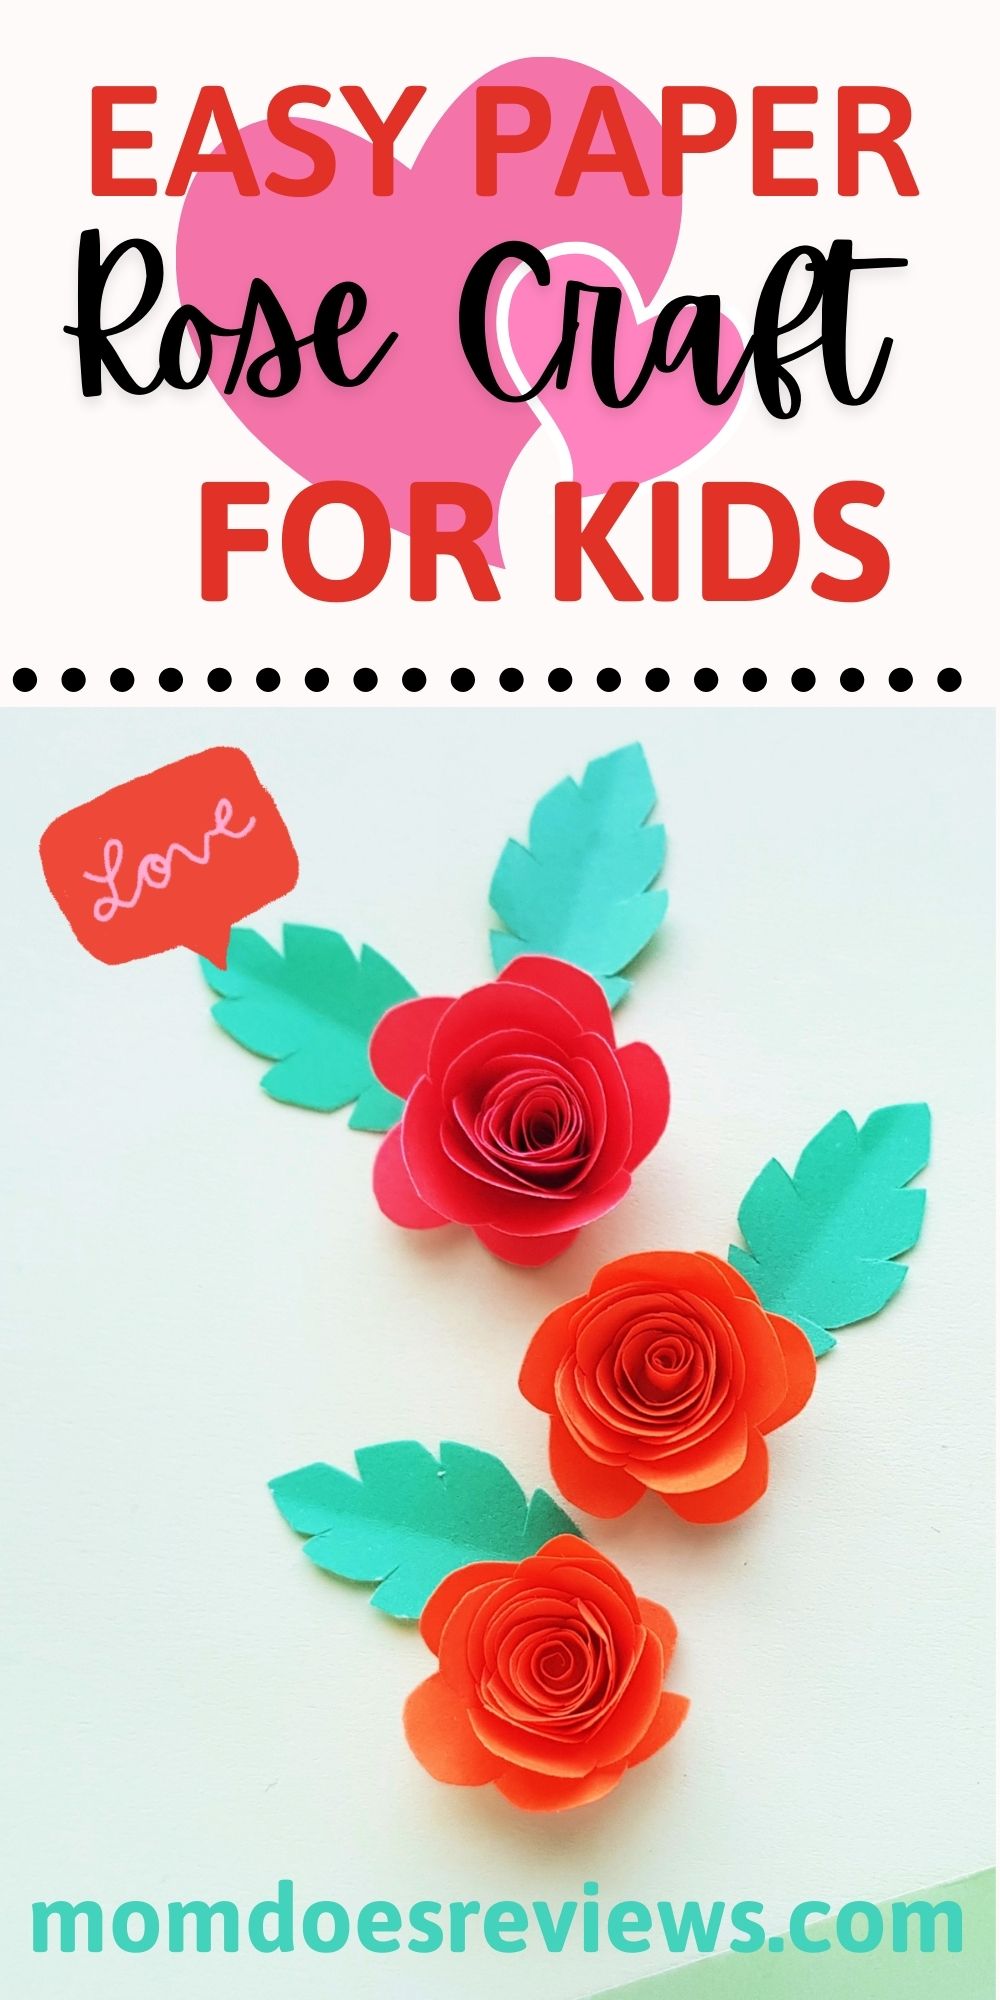 Easy Paper Rose Craft for Kids #papercraft #valentinesdaycraft #roses #DIY